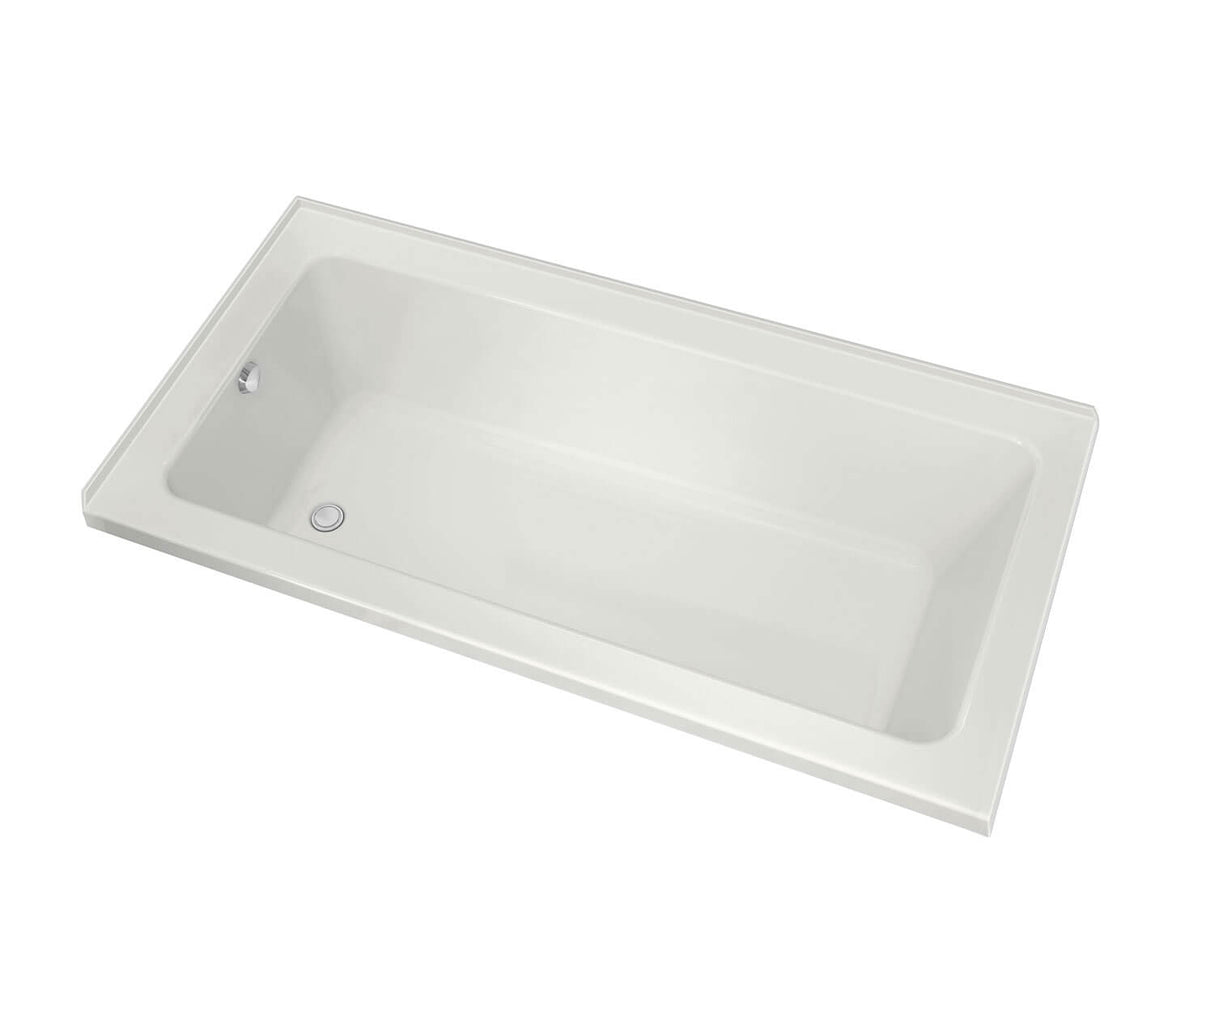 MAAX 106214-R-003-001 Pose 7242 IF Acrylic Corner Left Right-Hand Drain Whirlpool Bathtub in White